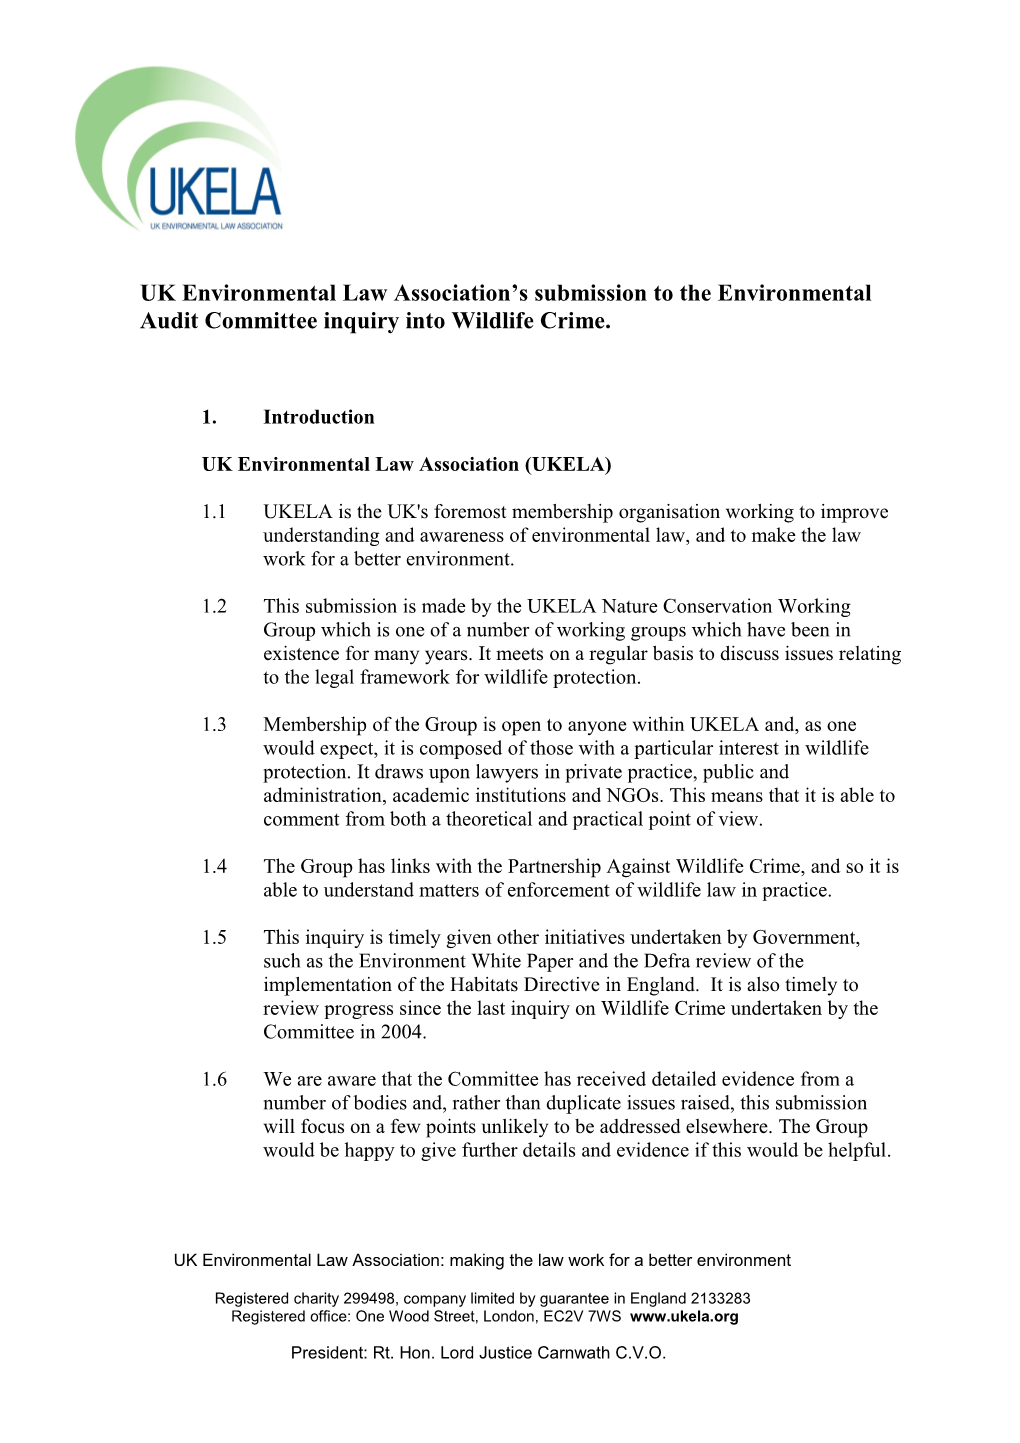 Ukenvironmental Law Association (UKELA)